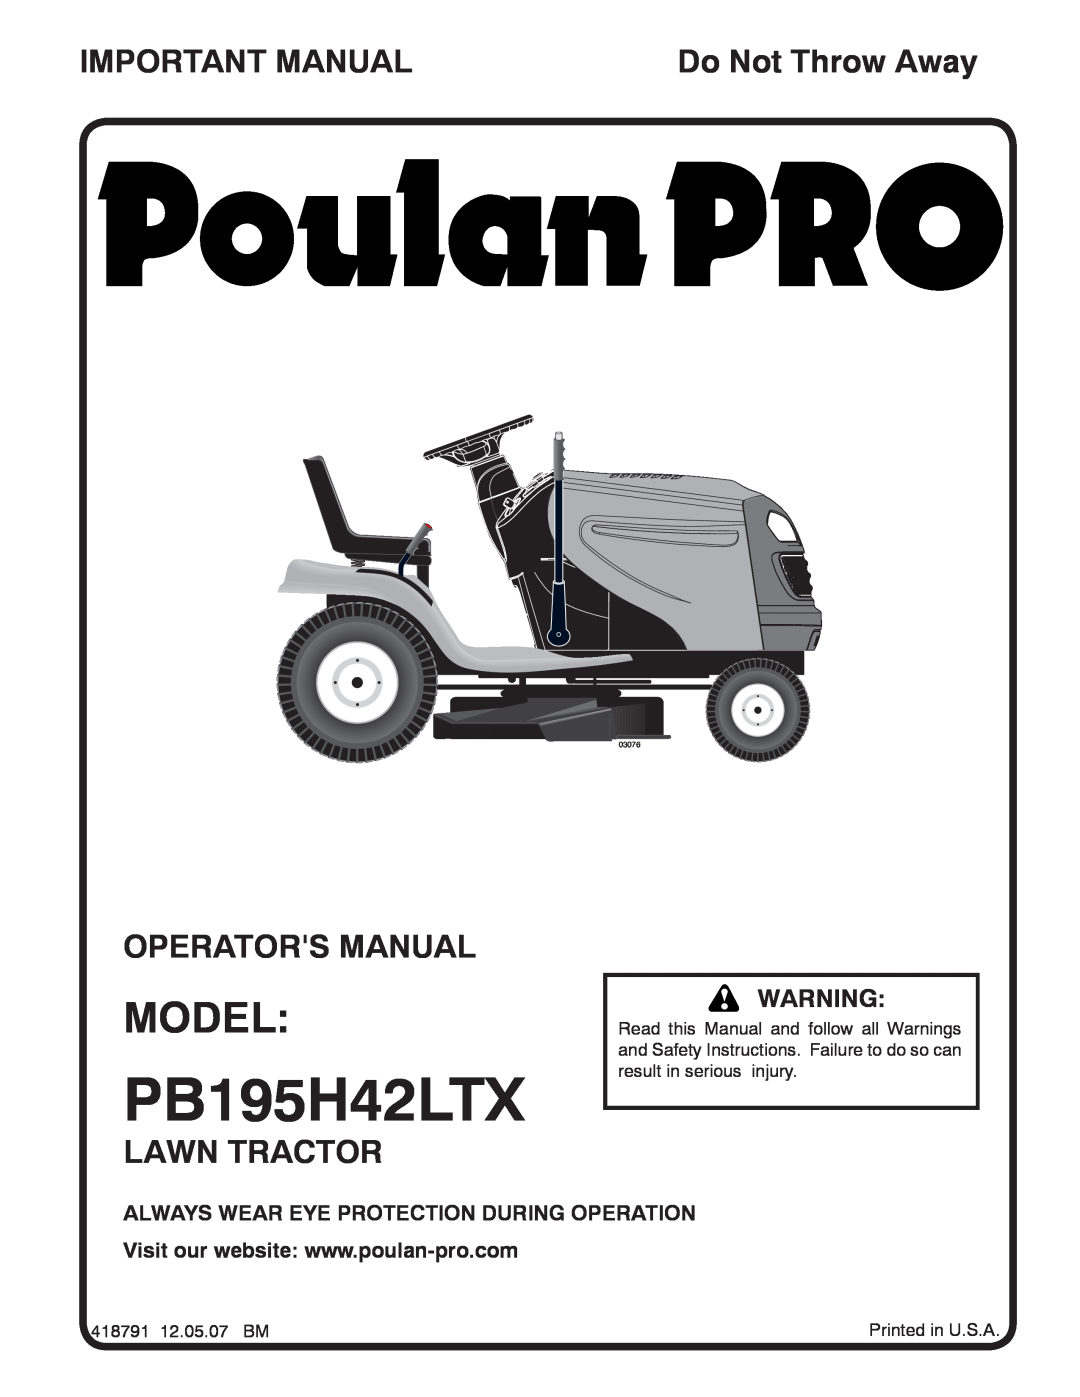 Poulan 418791 manual Model, Important Manual, Operators Manual, Lawn Tractor, Do Not Throw Away, PB195H42LTX, 03076 